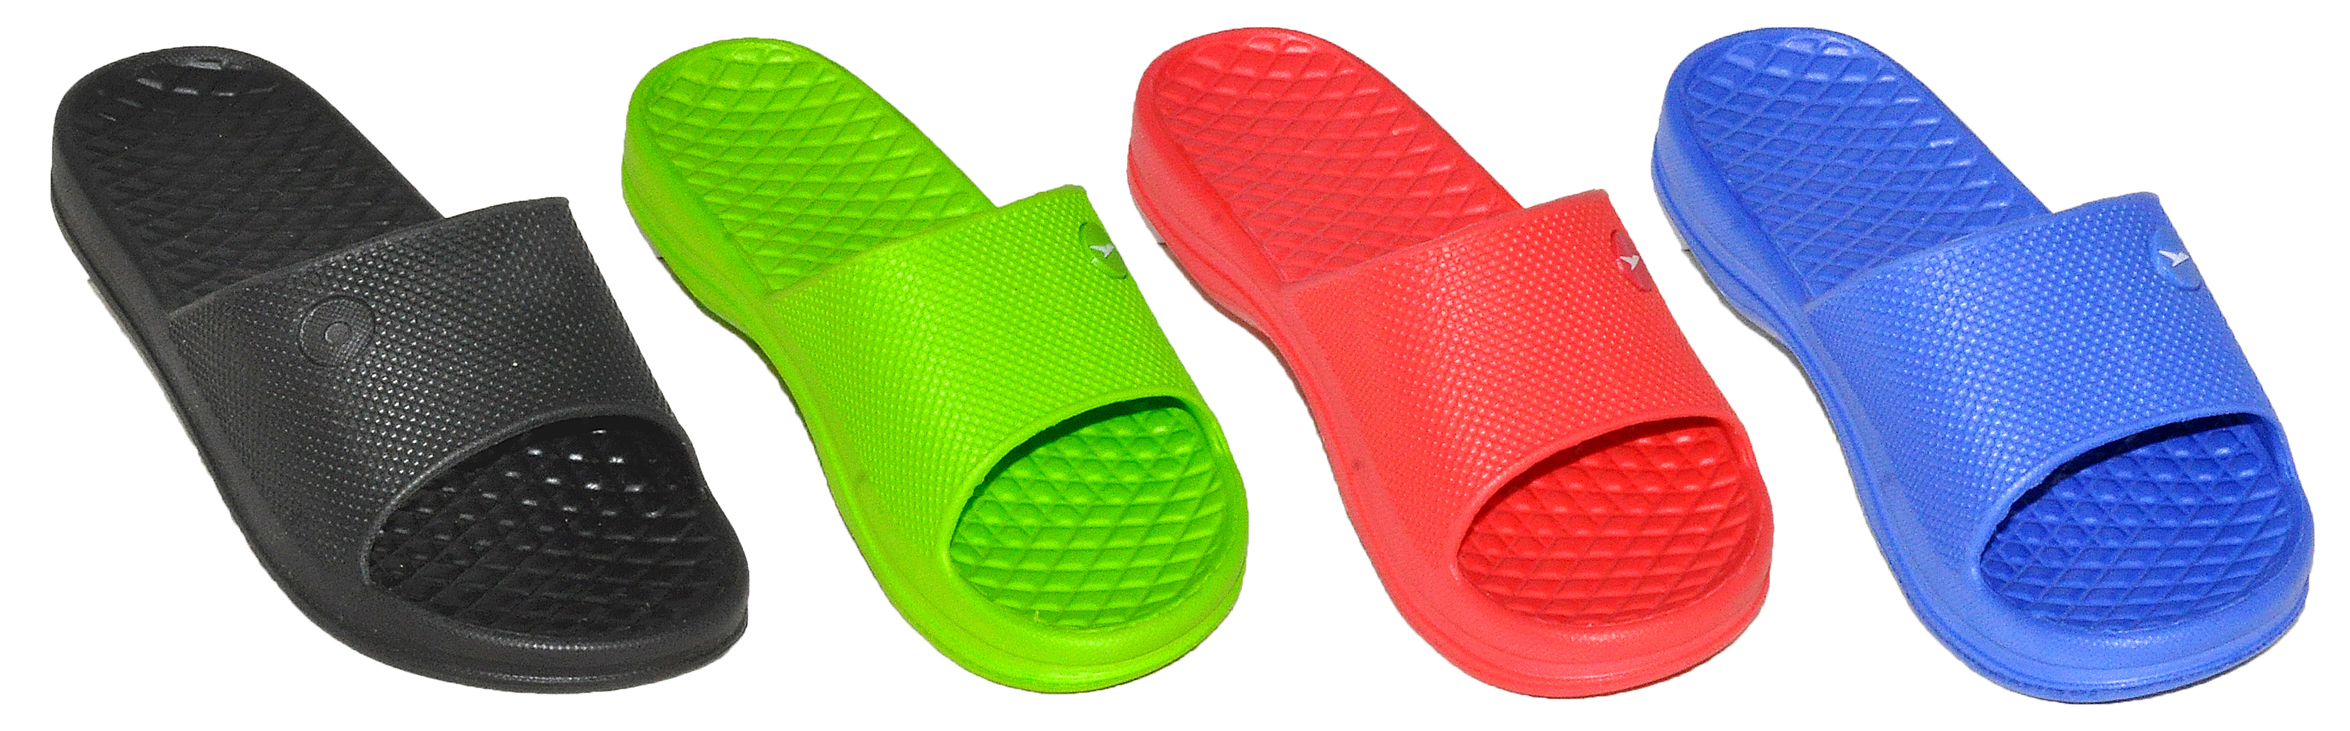 Boy's & Girl's EVA Slide SANDALS - Assorted Colors - Sizes 12/13-4/5